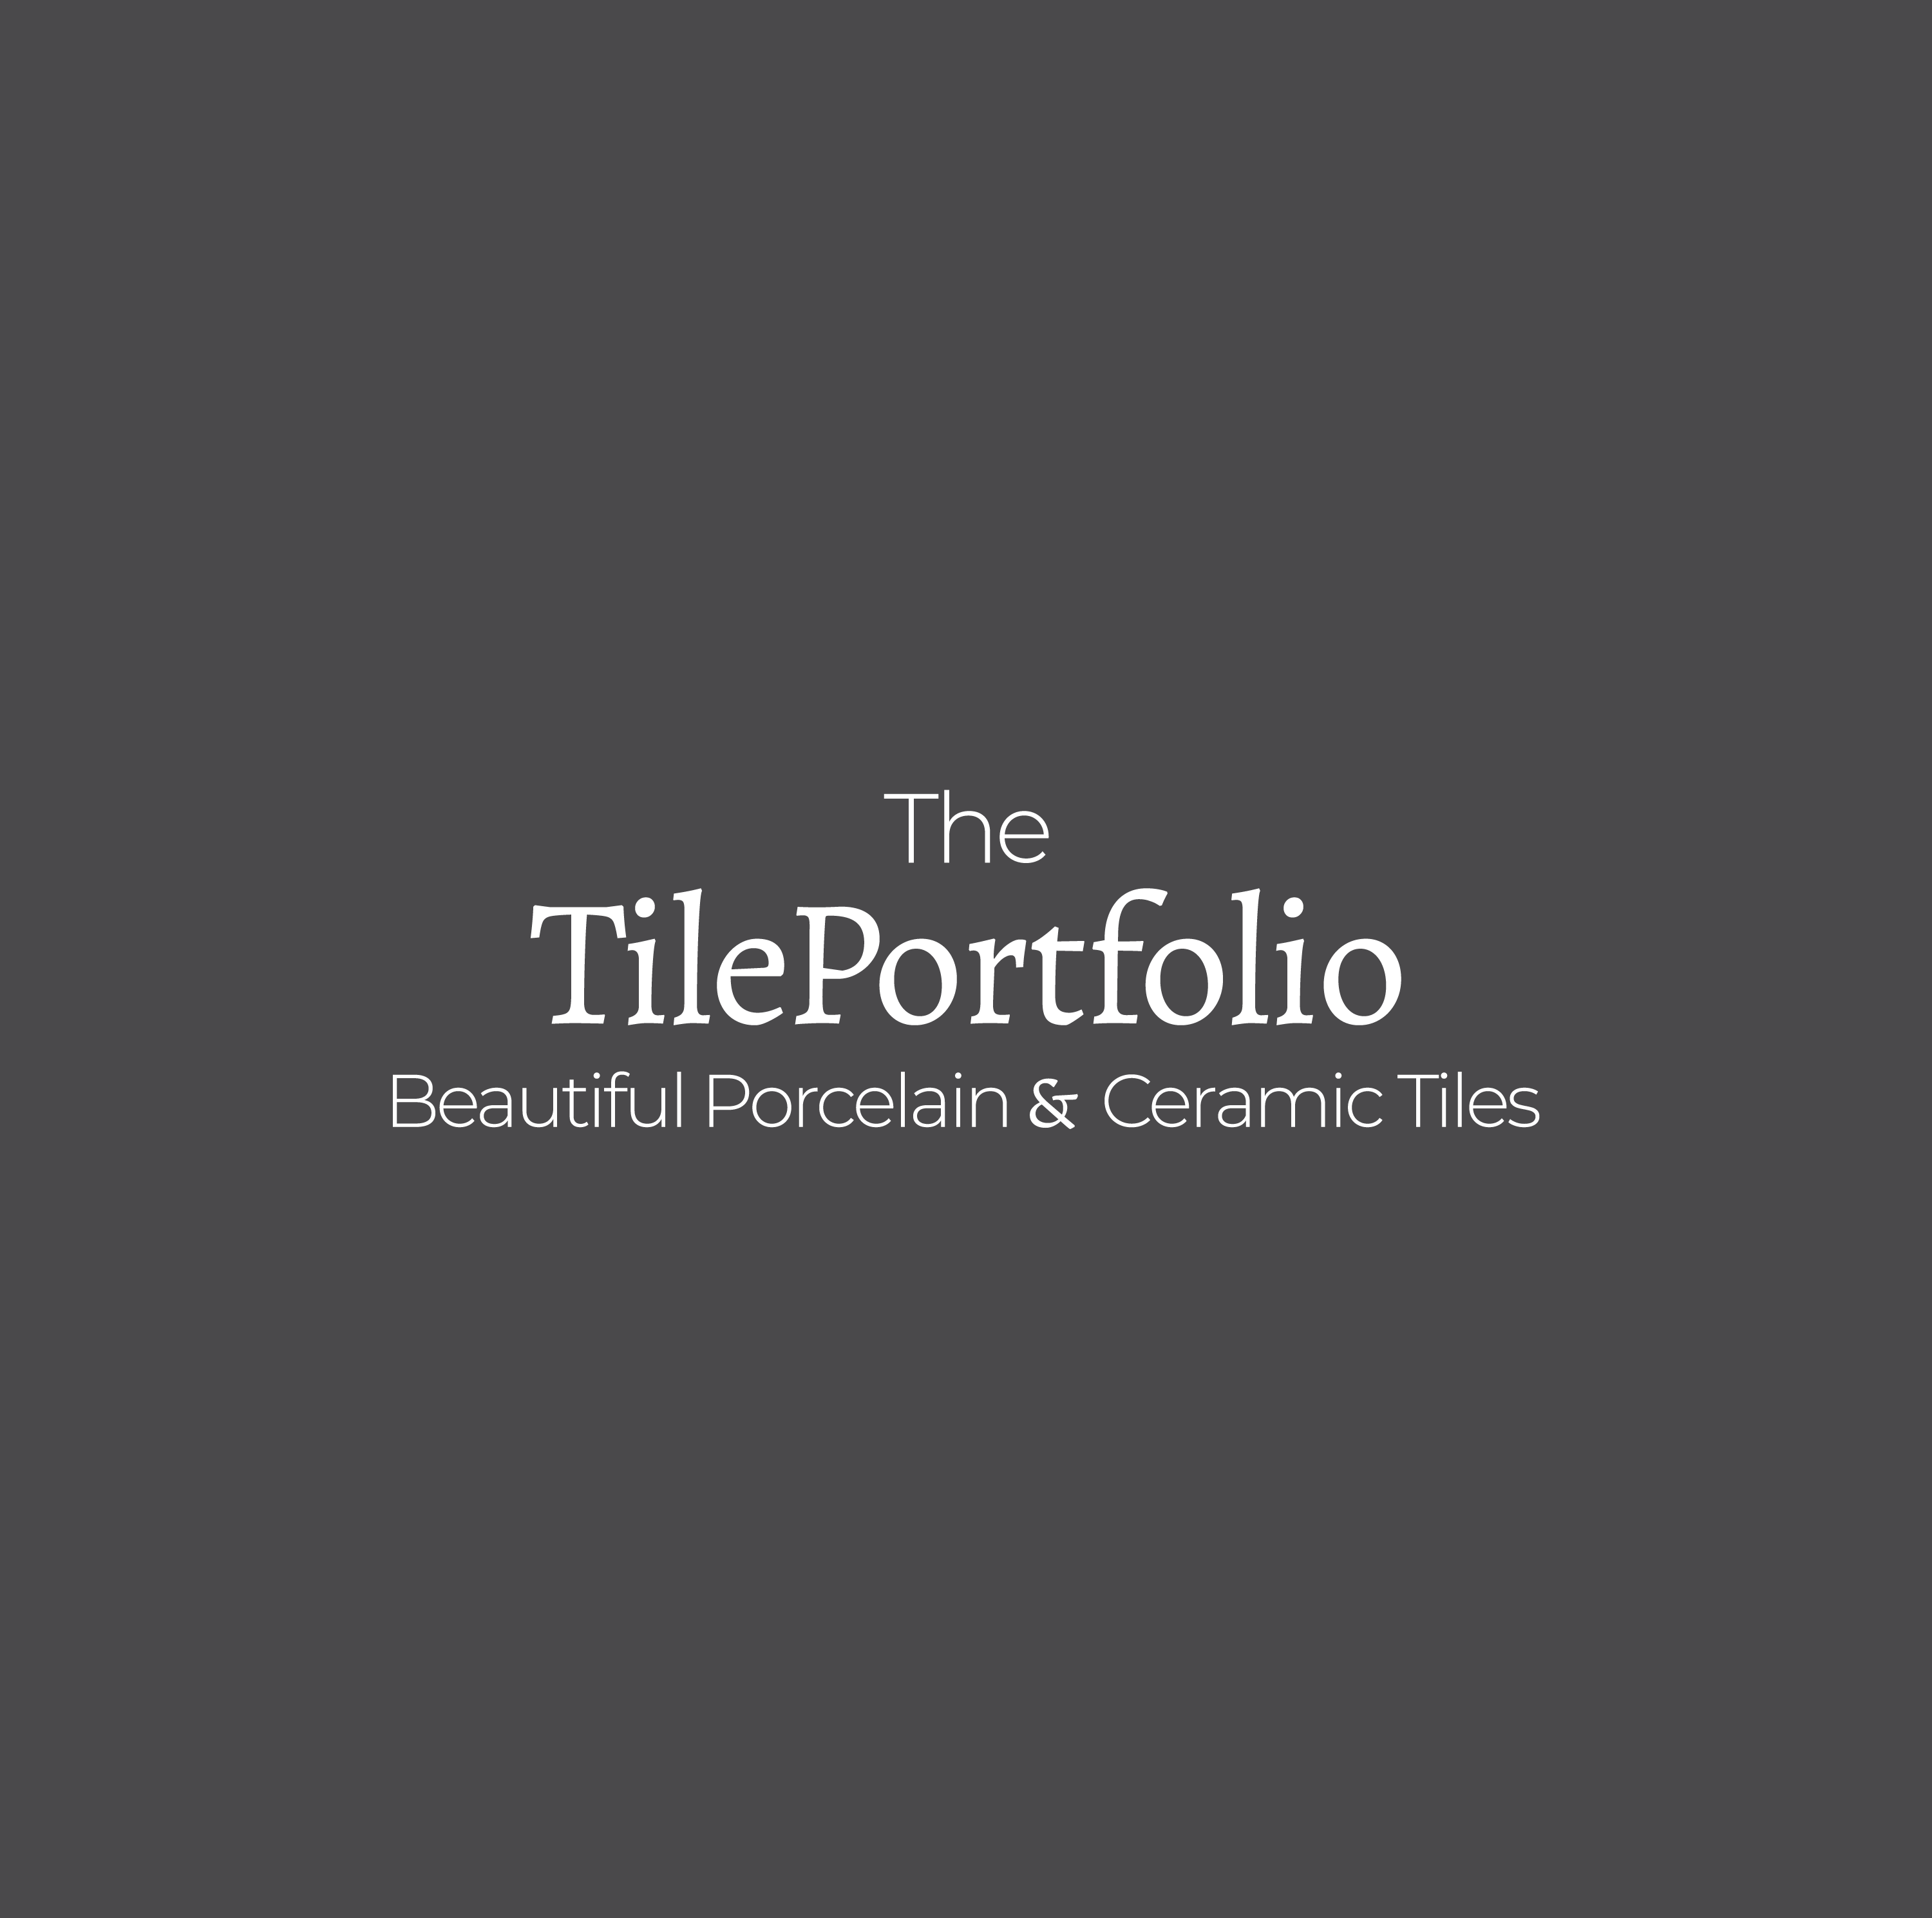 The TilePortfolio Ltd